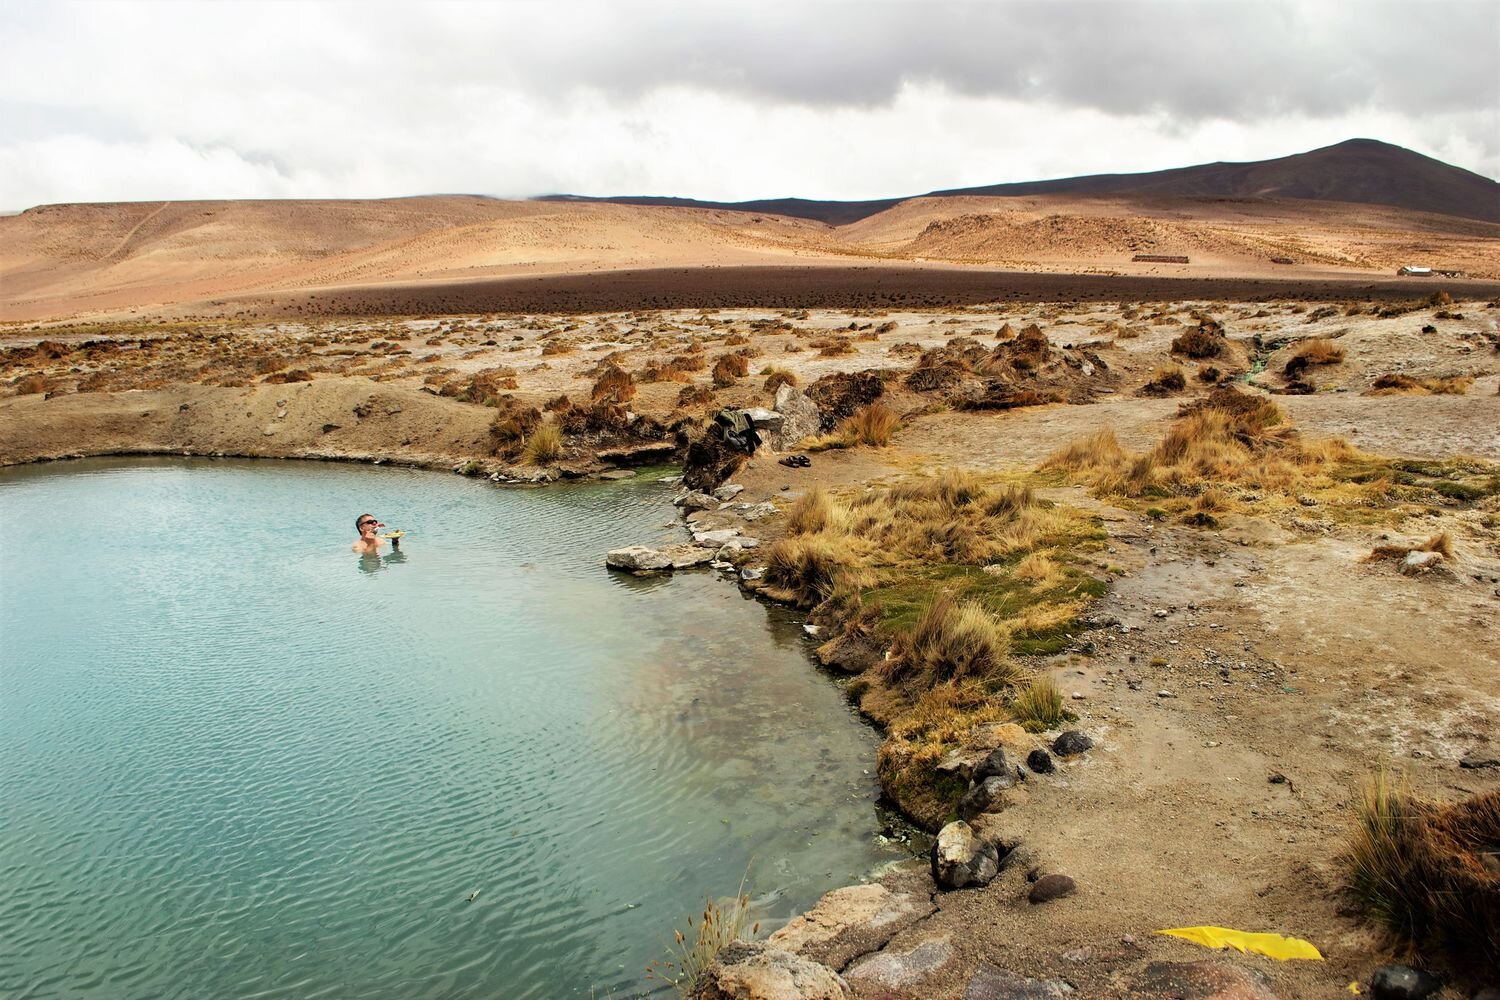  Hot springs in the Chilean altiplano. El Tatio Geyser, Chile. 